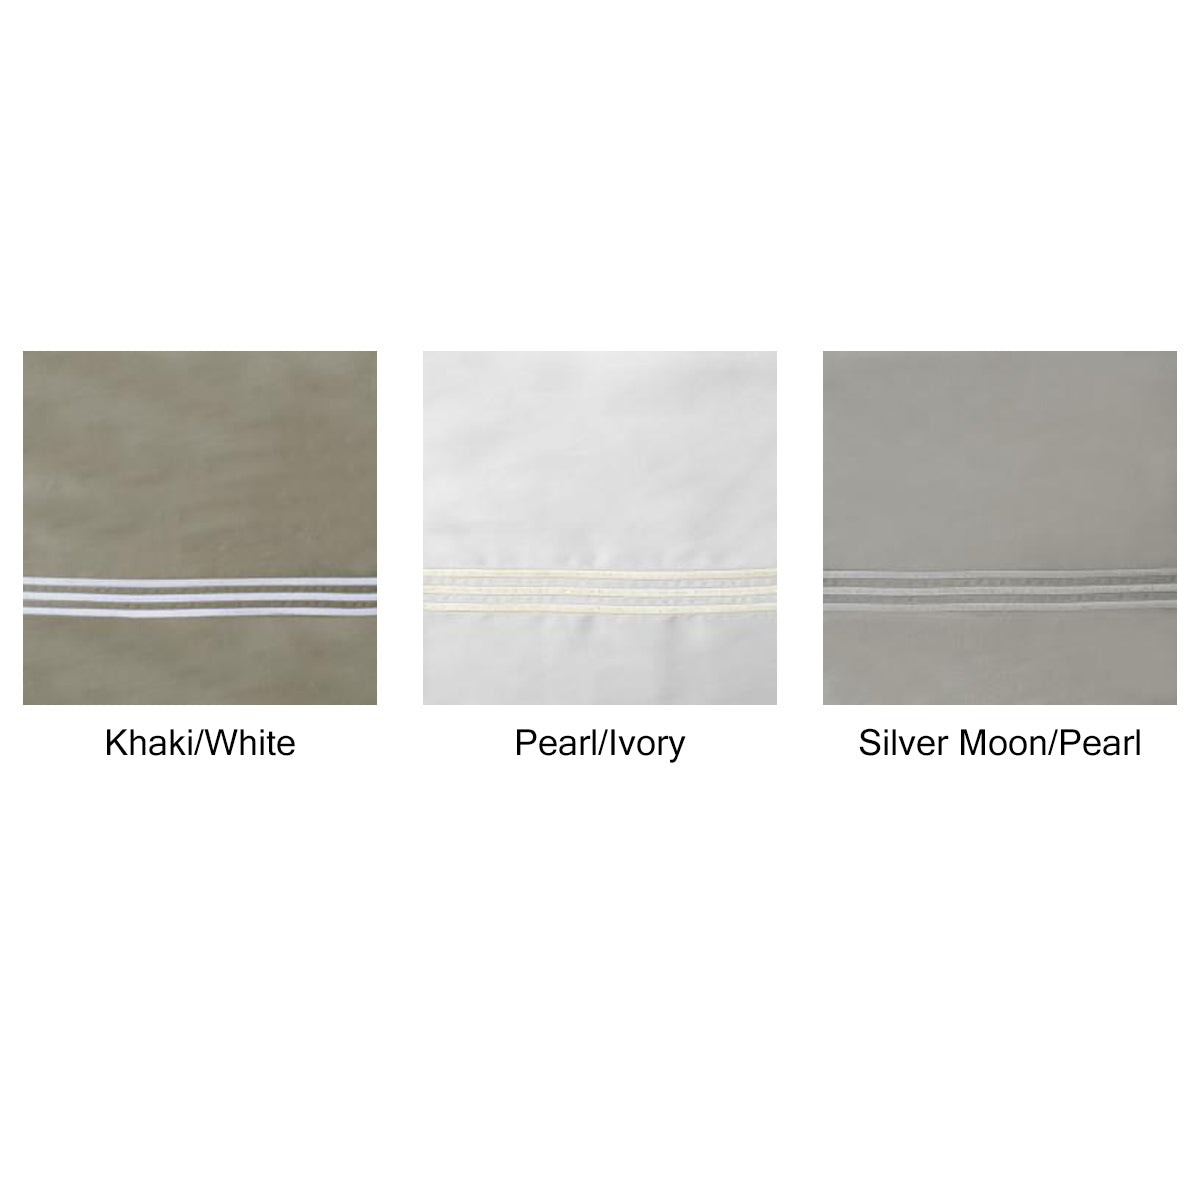 Platinum Sateen Bed Linens - Pioneer Linens